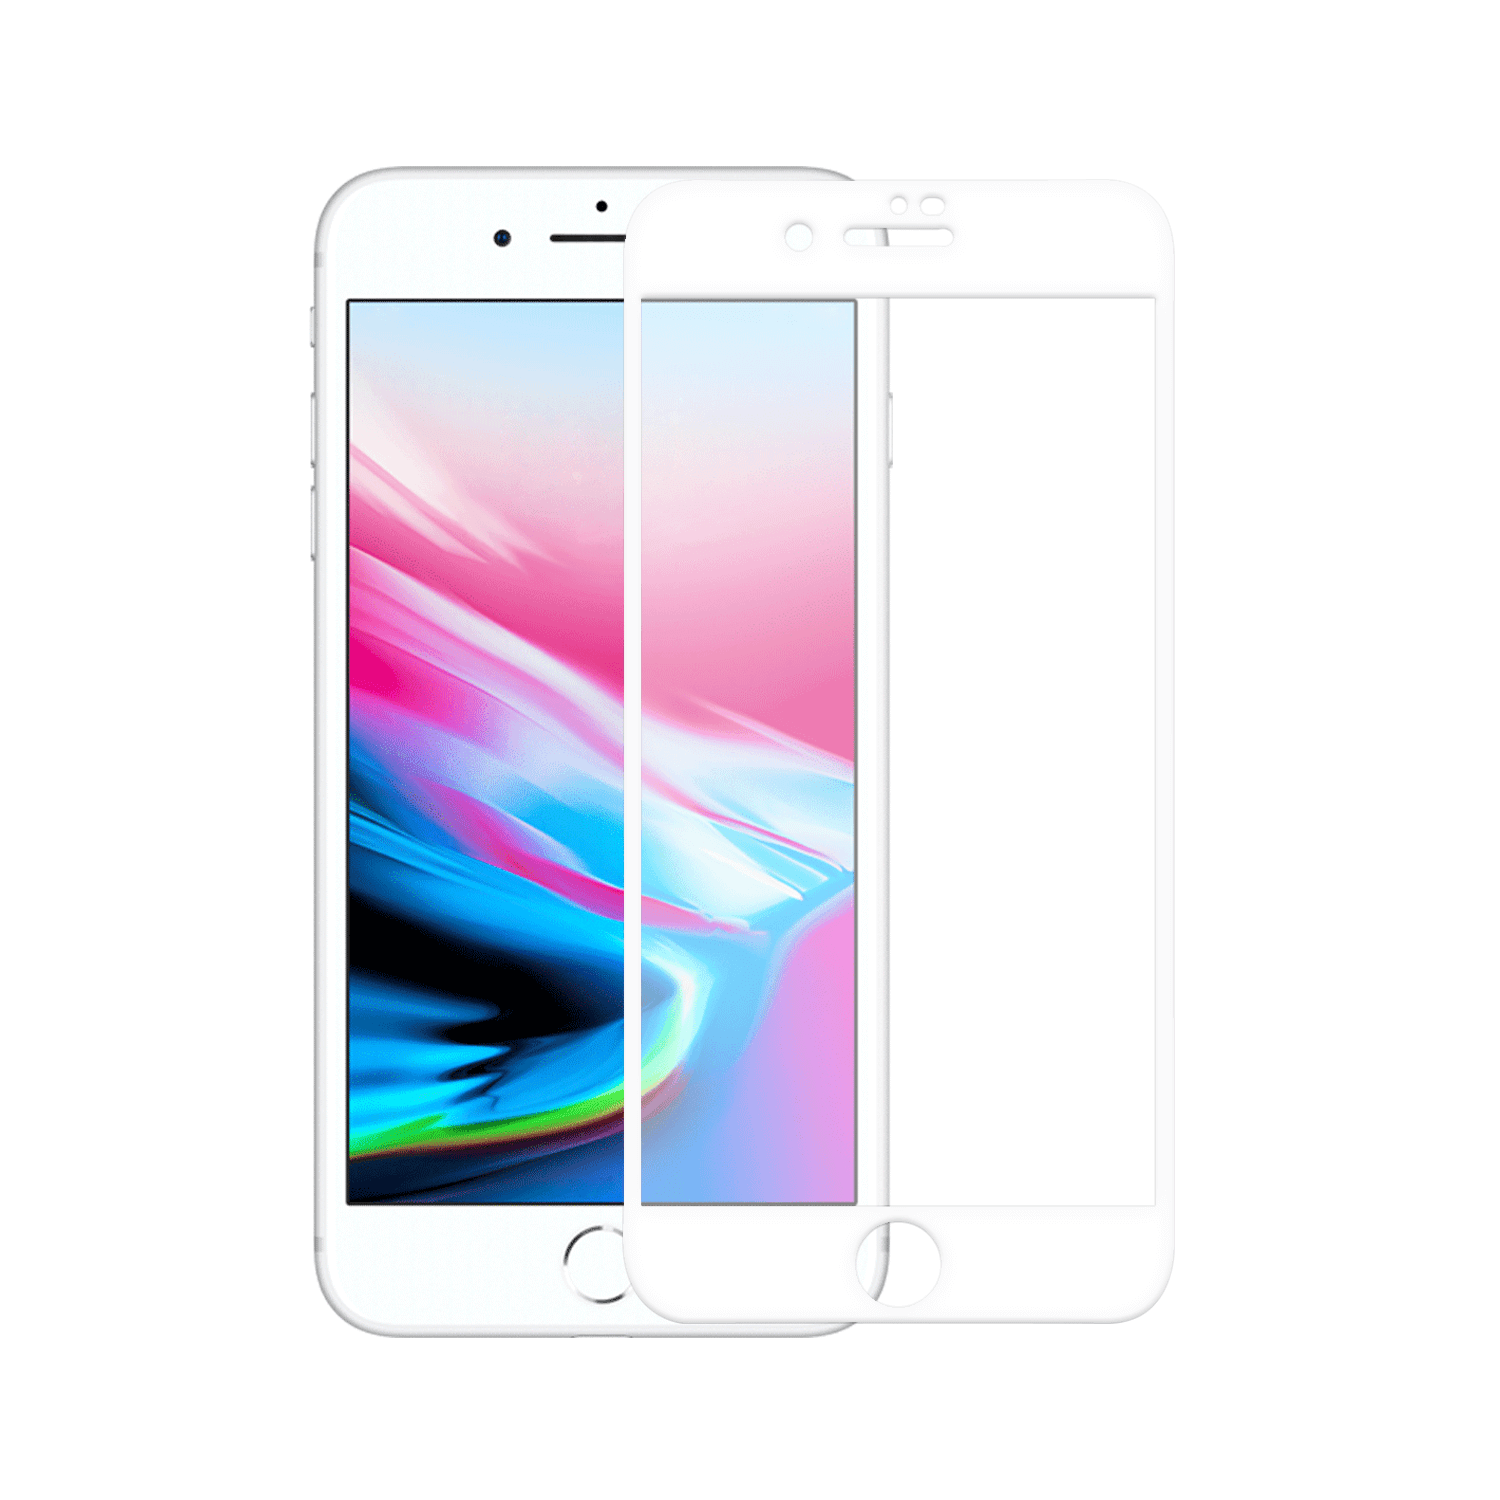 mild Dalset Oriënteren iPhone 8 Plus screenprotector - Gehard glas - Telefoonglaasje